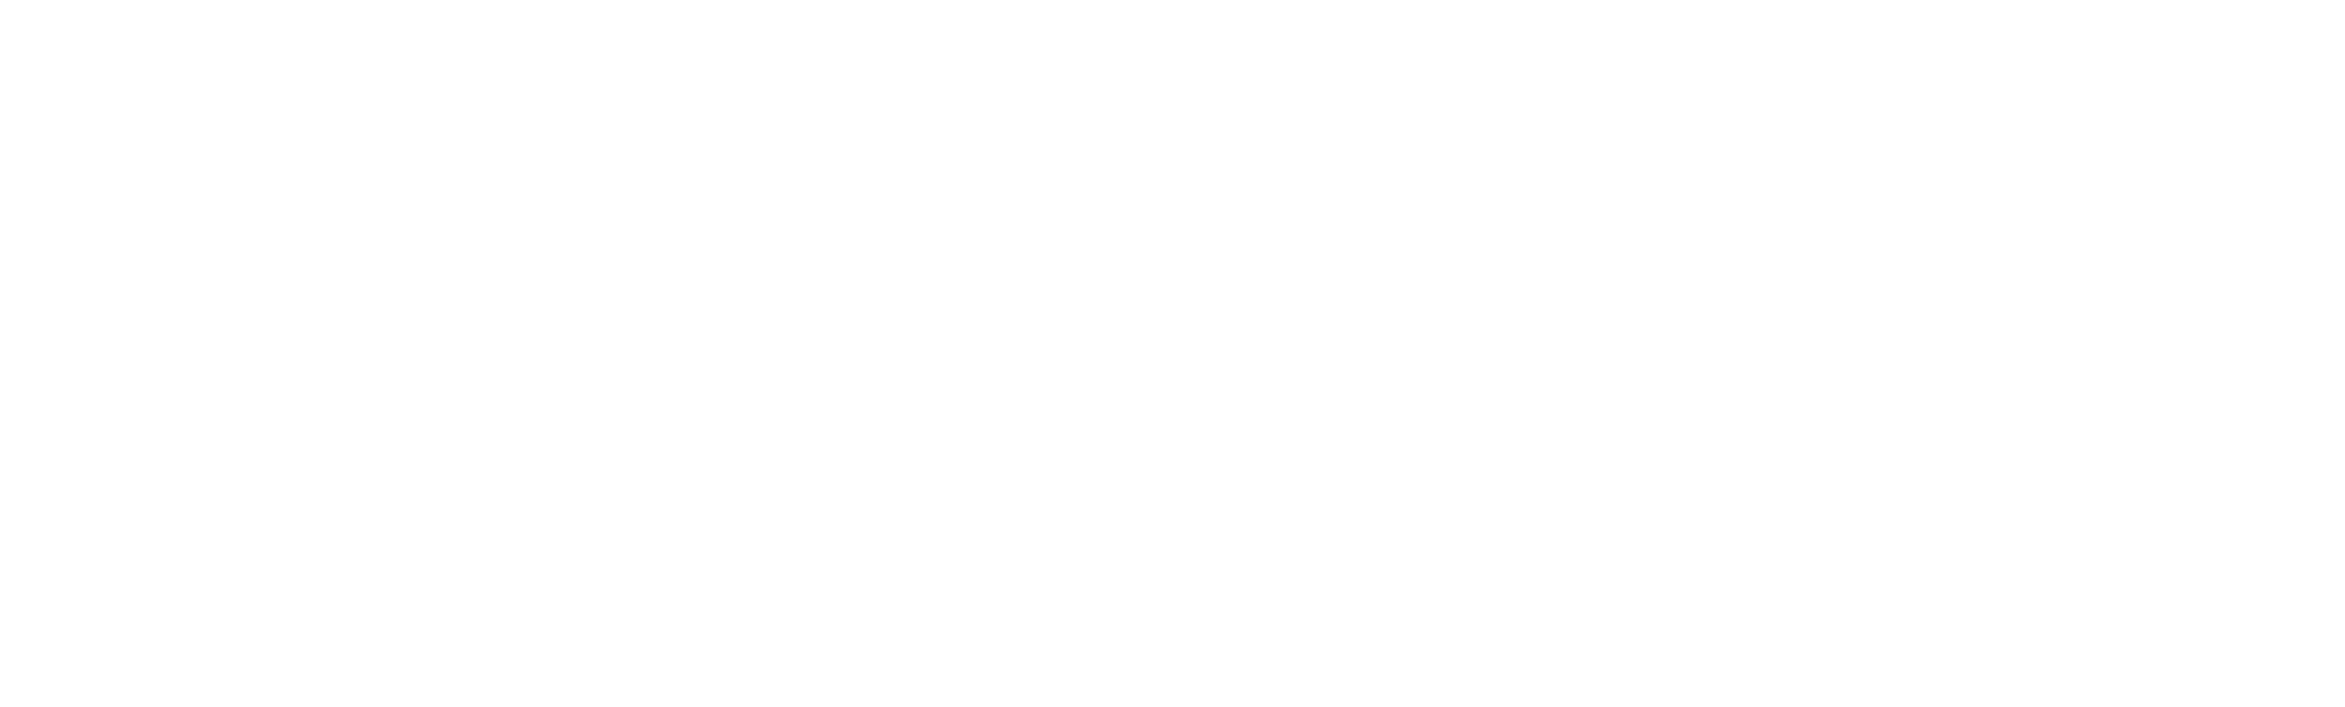 PressPage Logo Home White